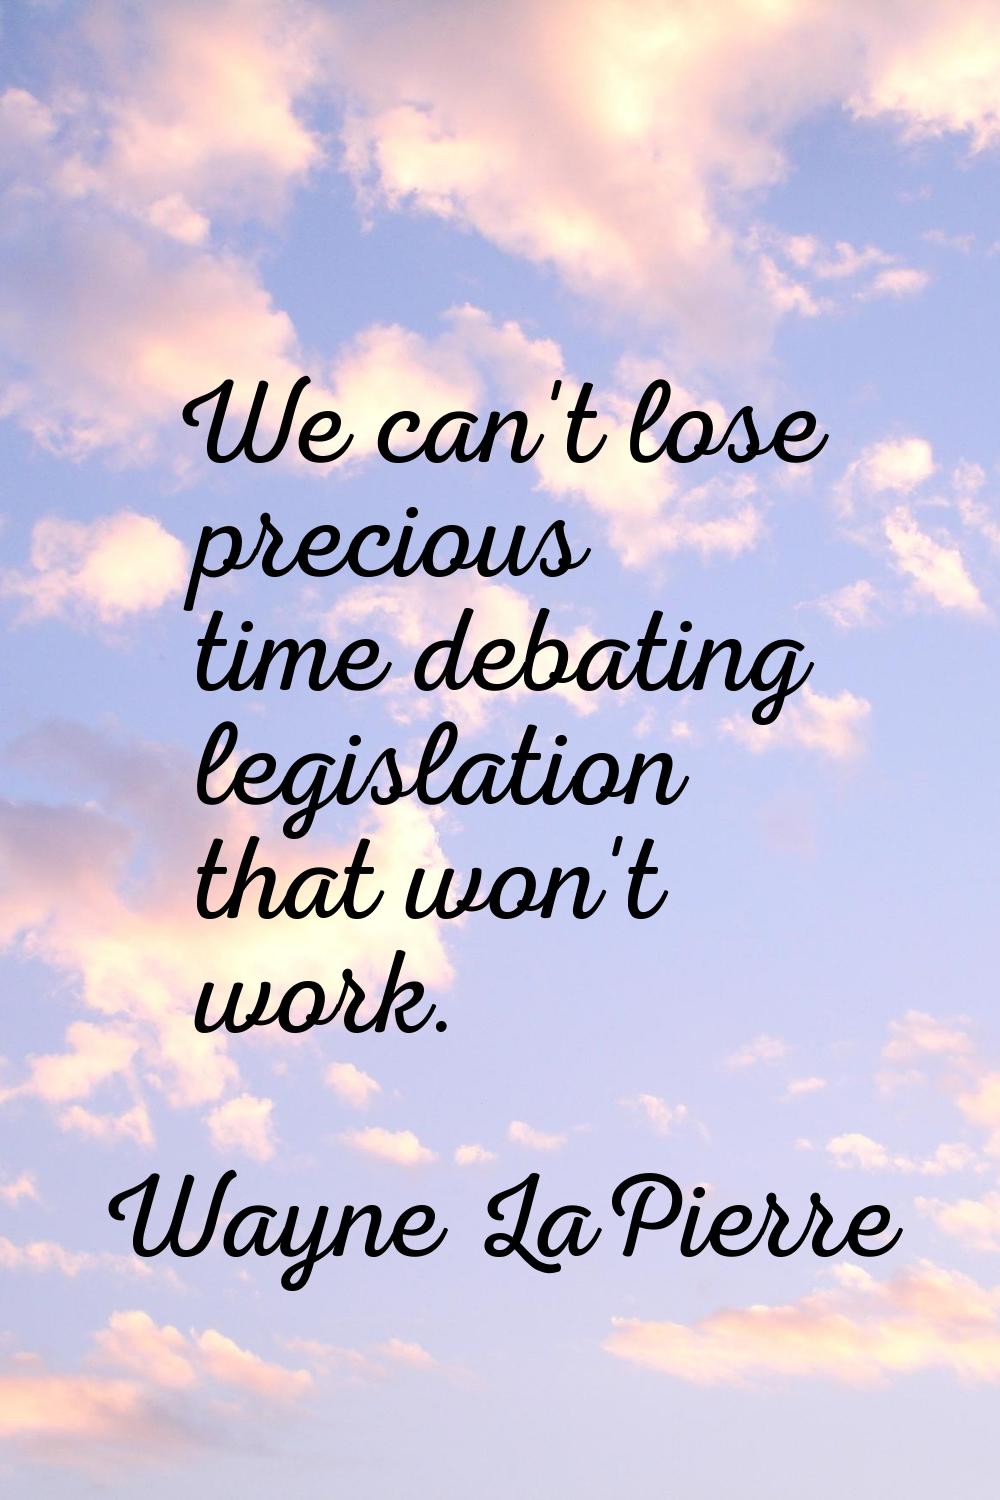 We can't lose precious time debating legislation that won't work.